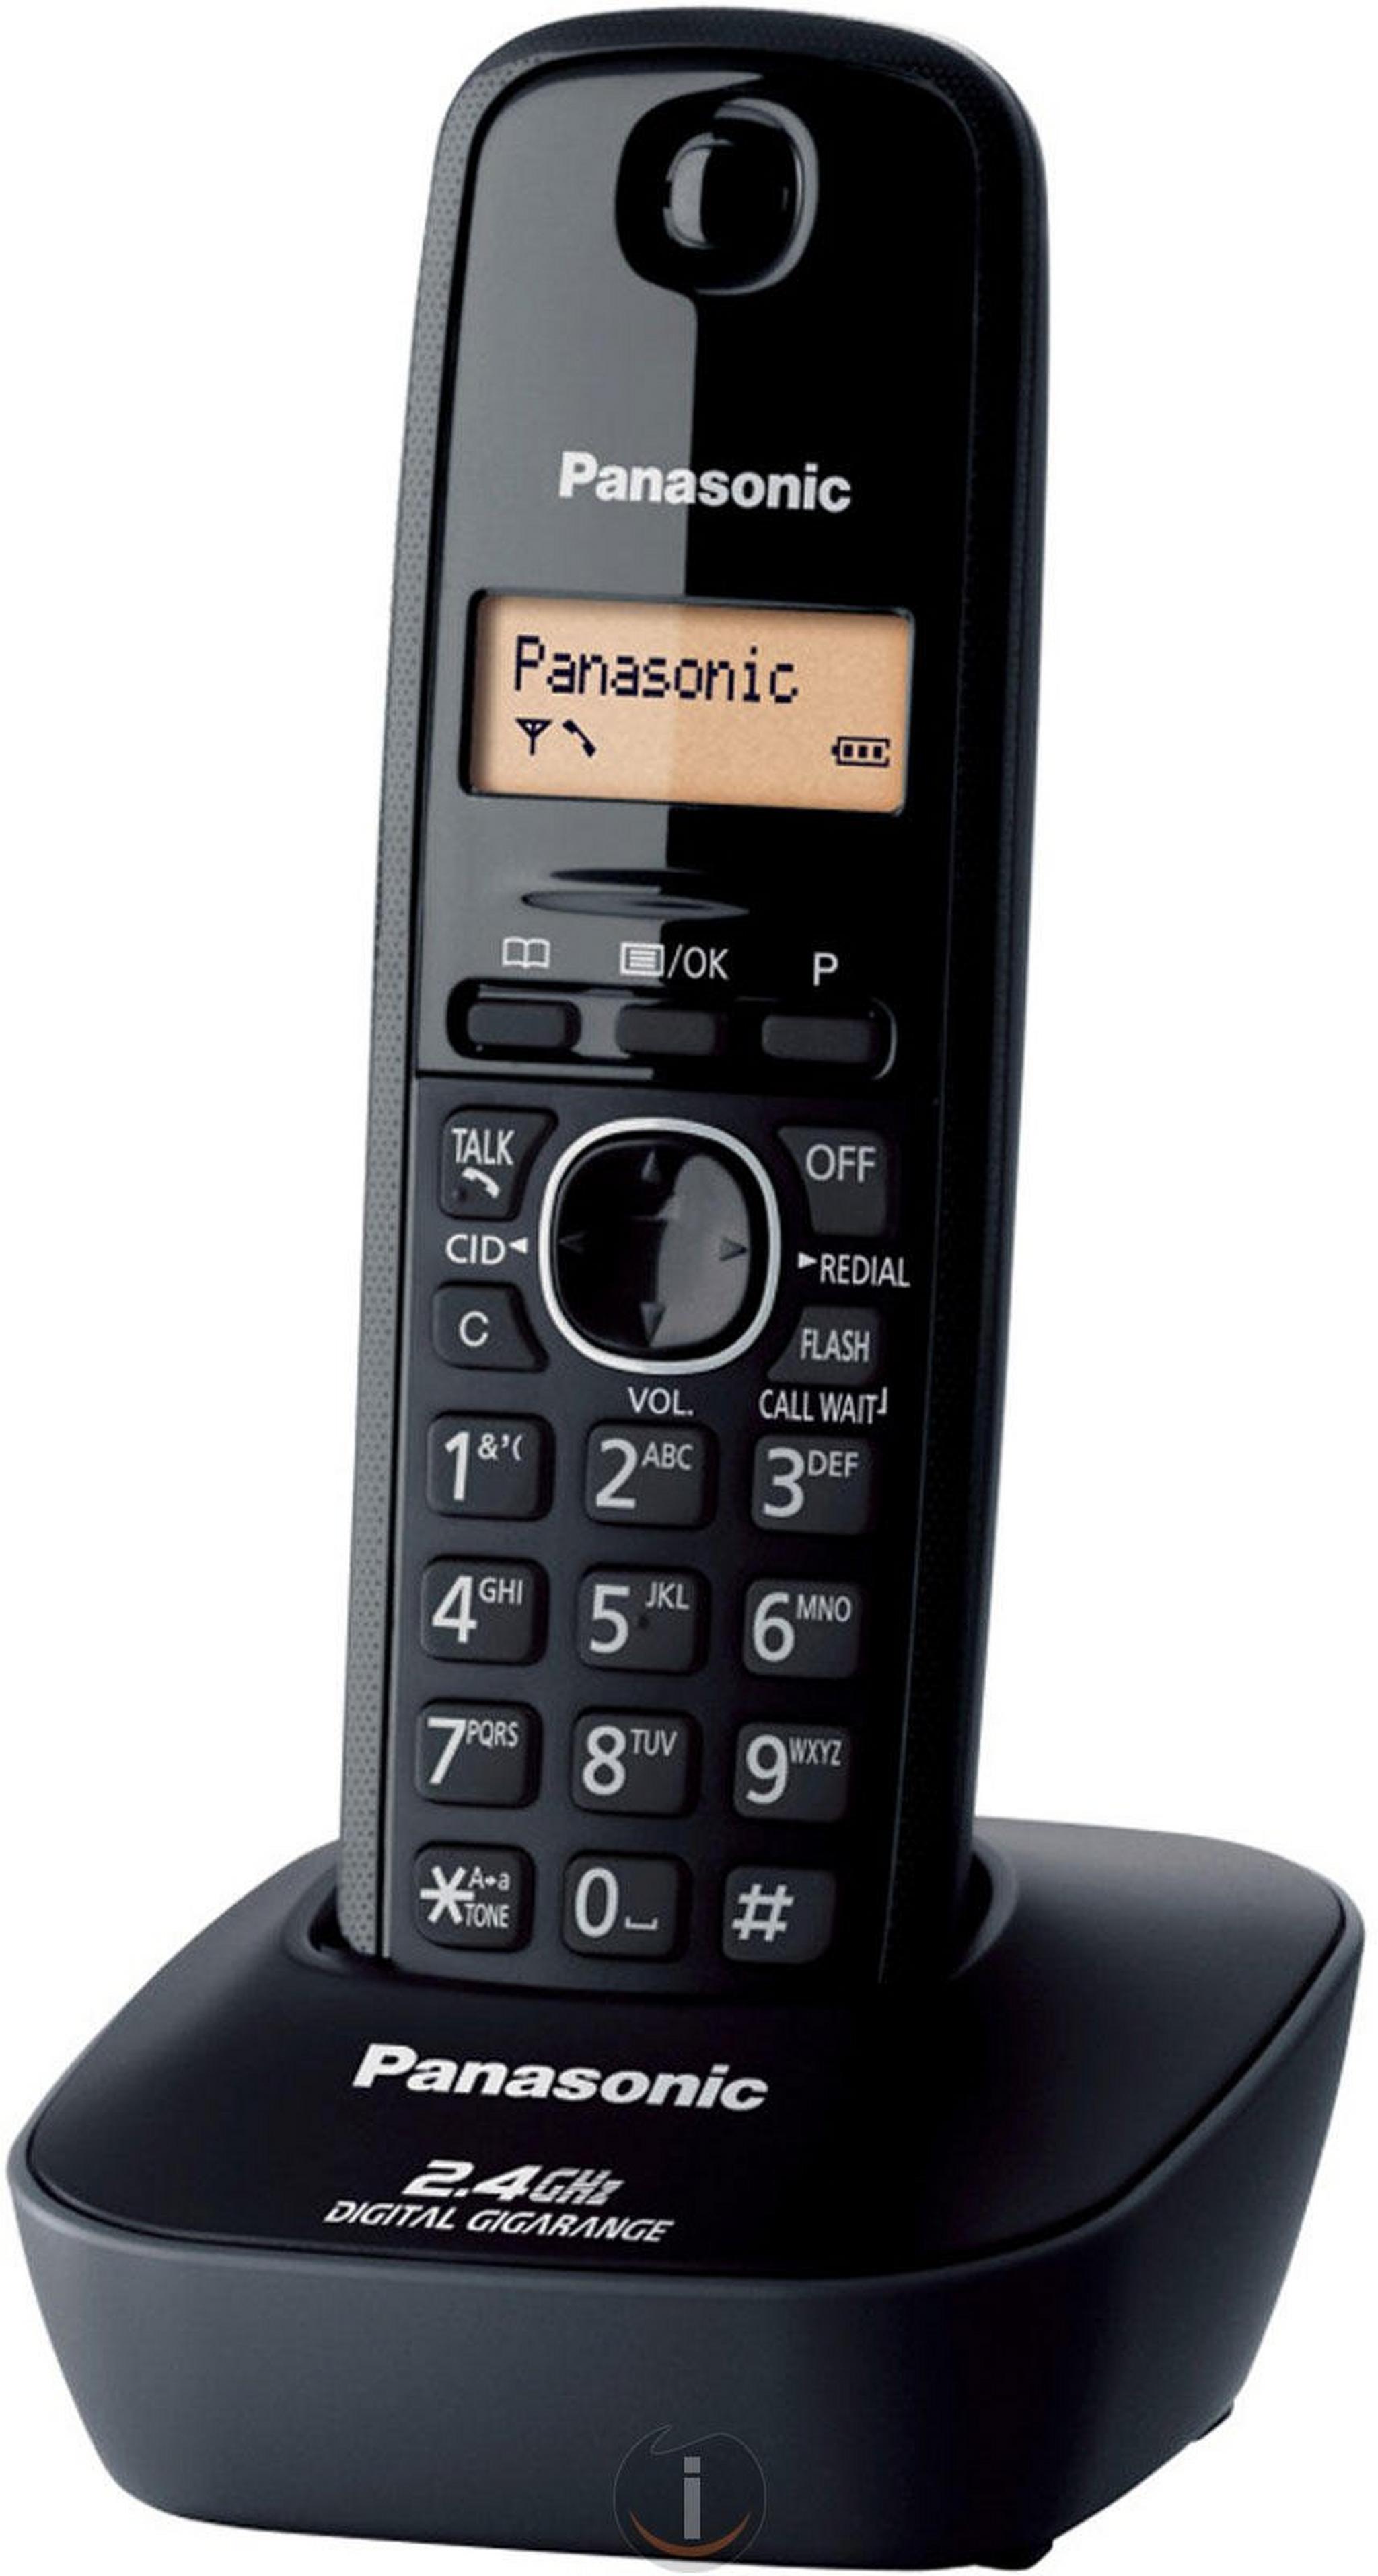 Panasonic KX-TG3411BX 2.4GHz Cordless Phone